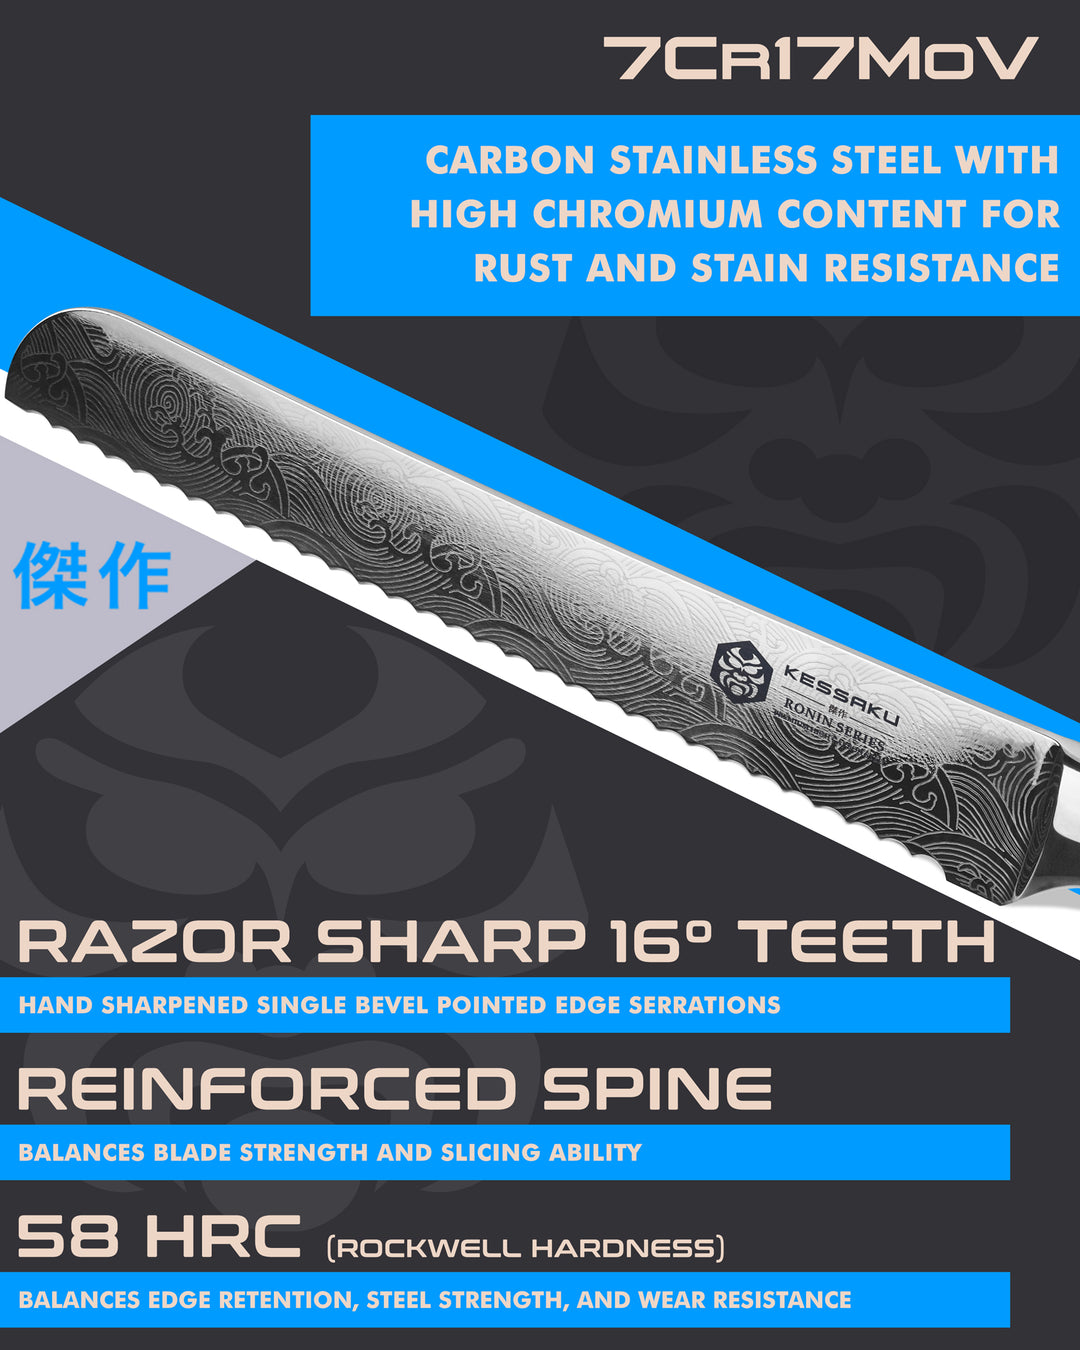 Kessaku Ronin Bread Knife blade features: 7Cr17MoV steel, 58 HRC, 16 degree edge, reinforced spine